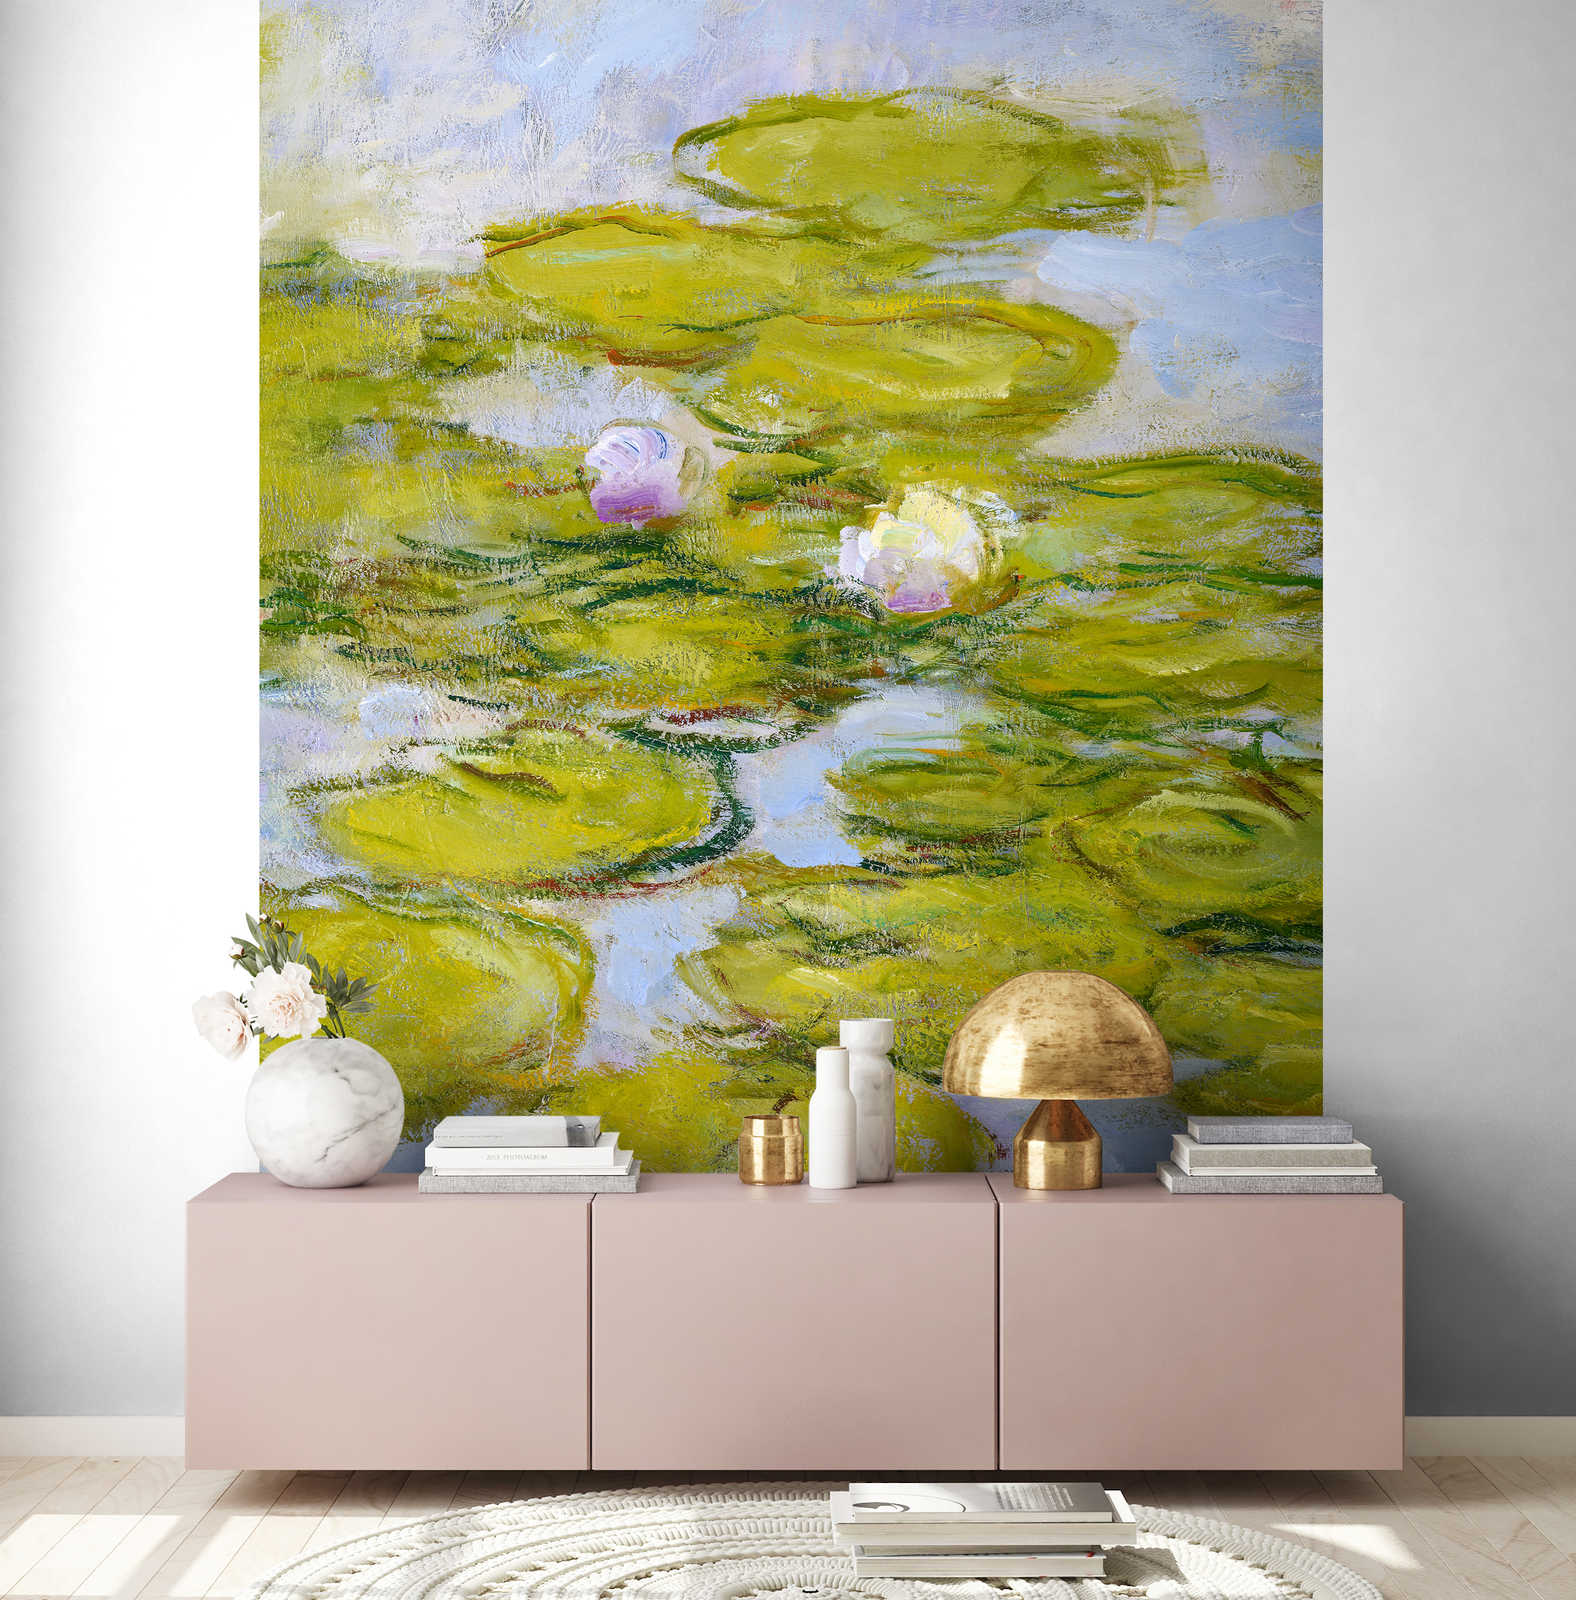             Papel pintado fotográfico "Ninfas" de Claude Monet
        